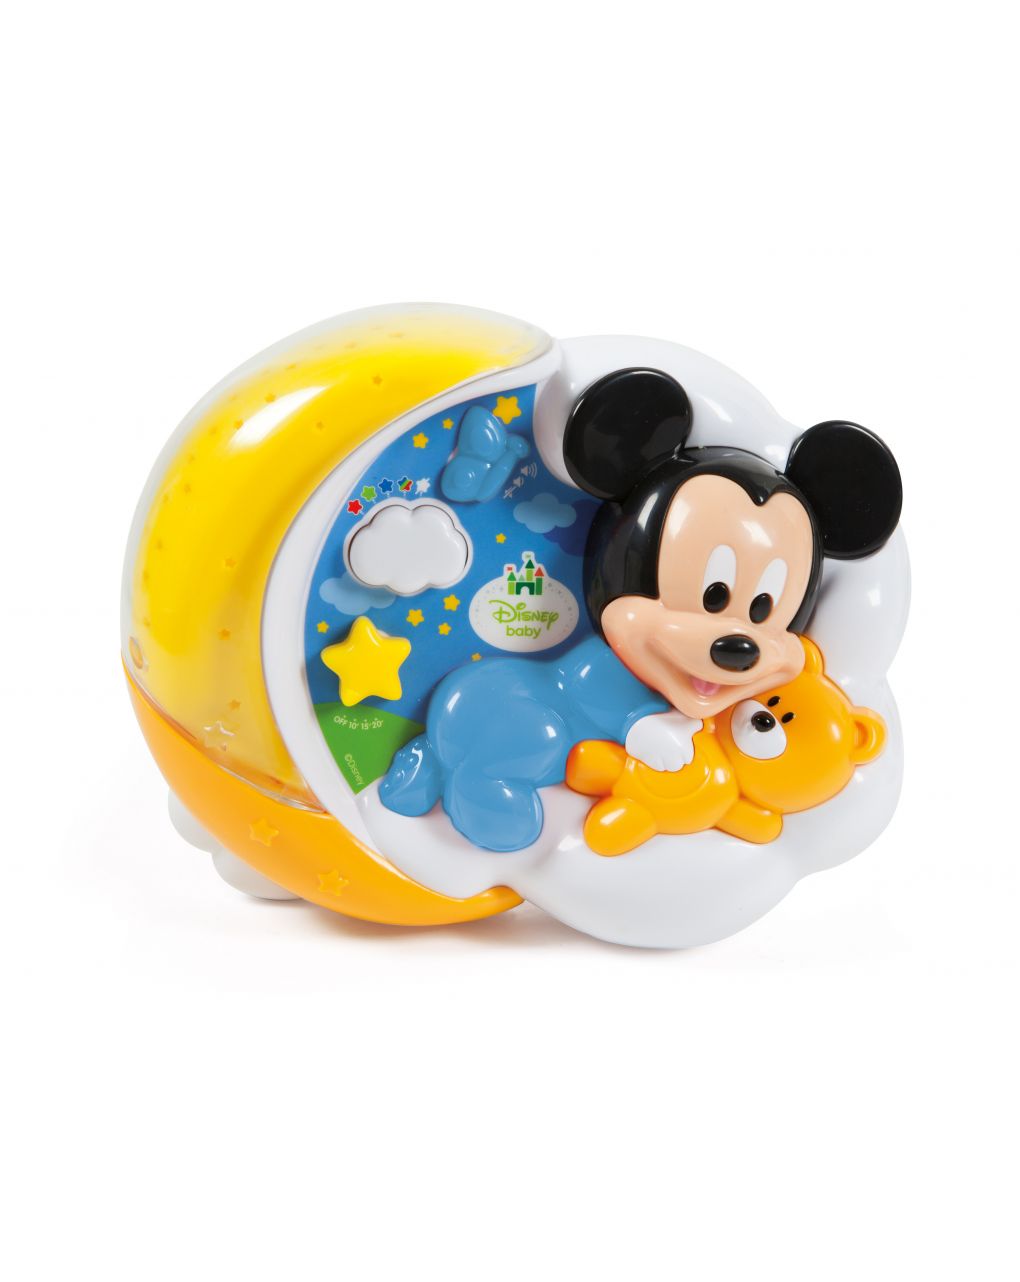 Disney baby - baby mickey proiettore magiche stelle